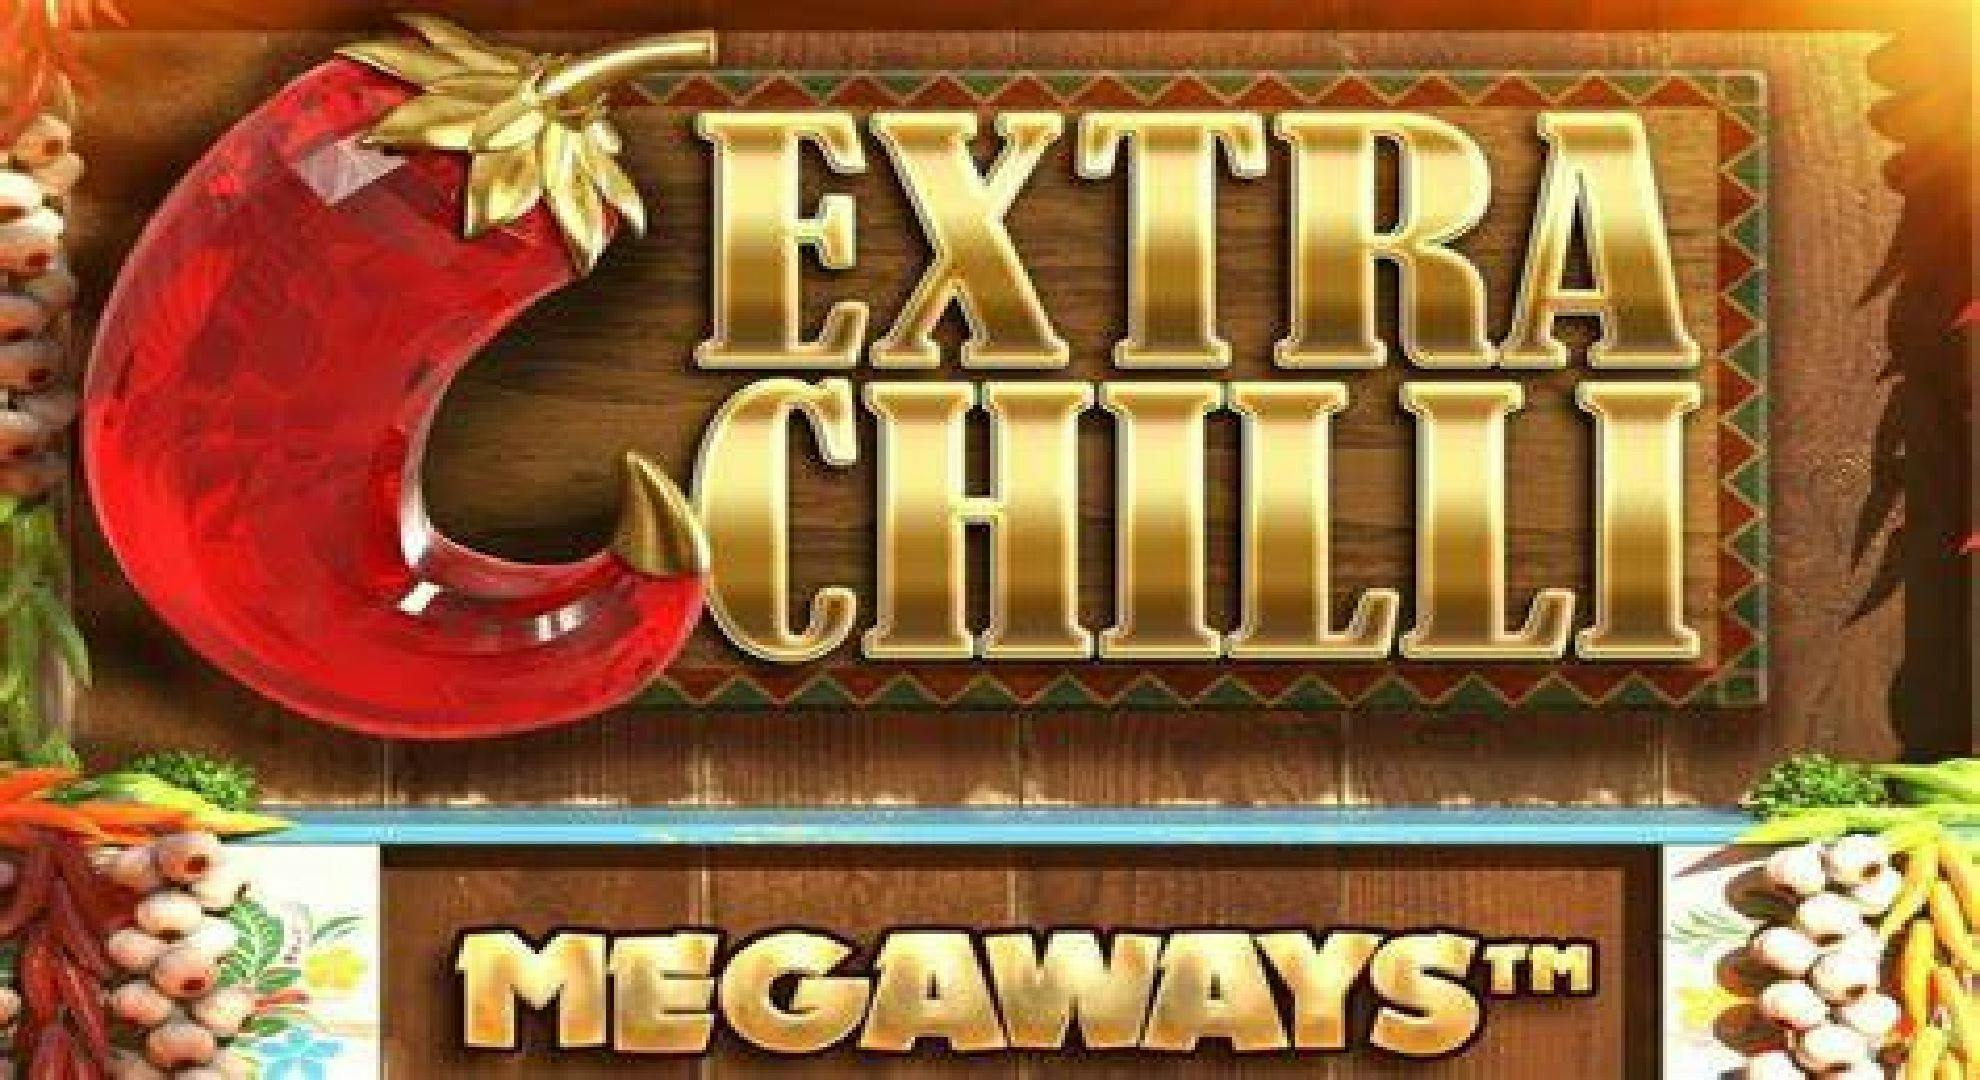 Extra Chilli Megaways Slot Online Free Play